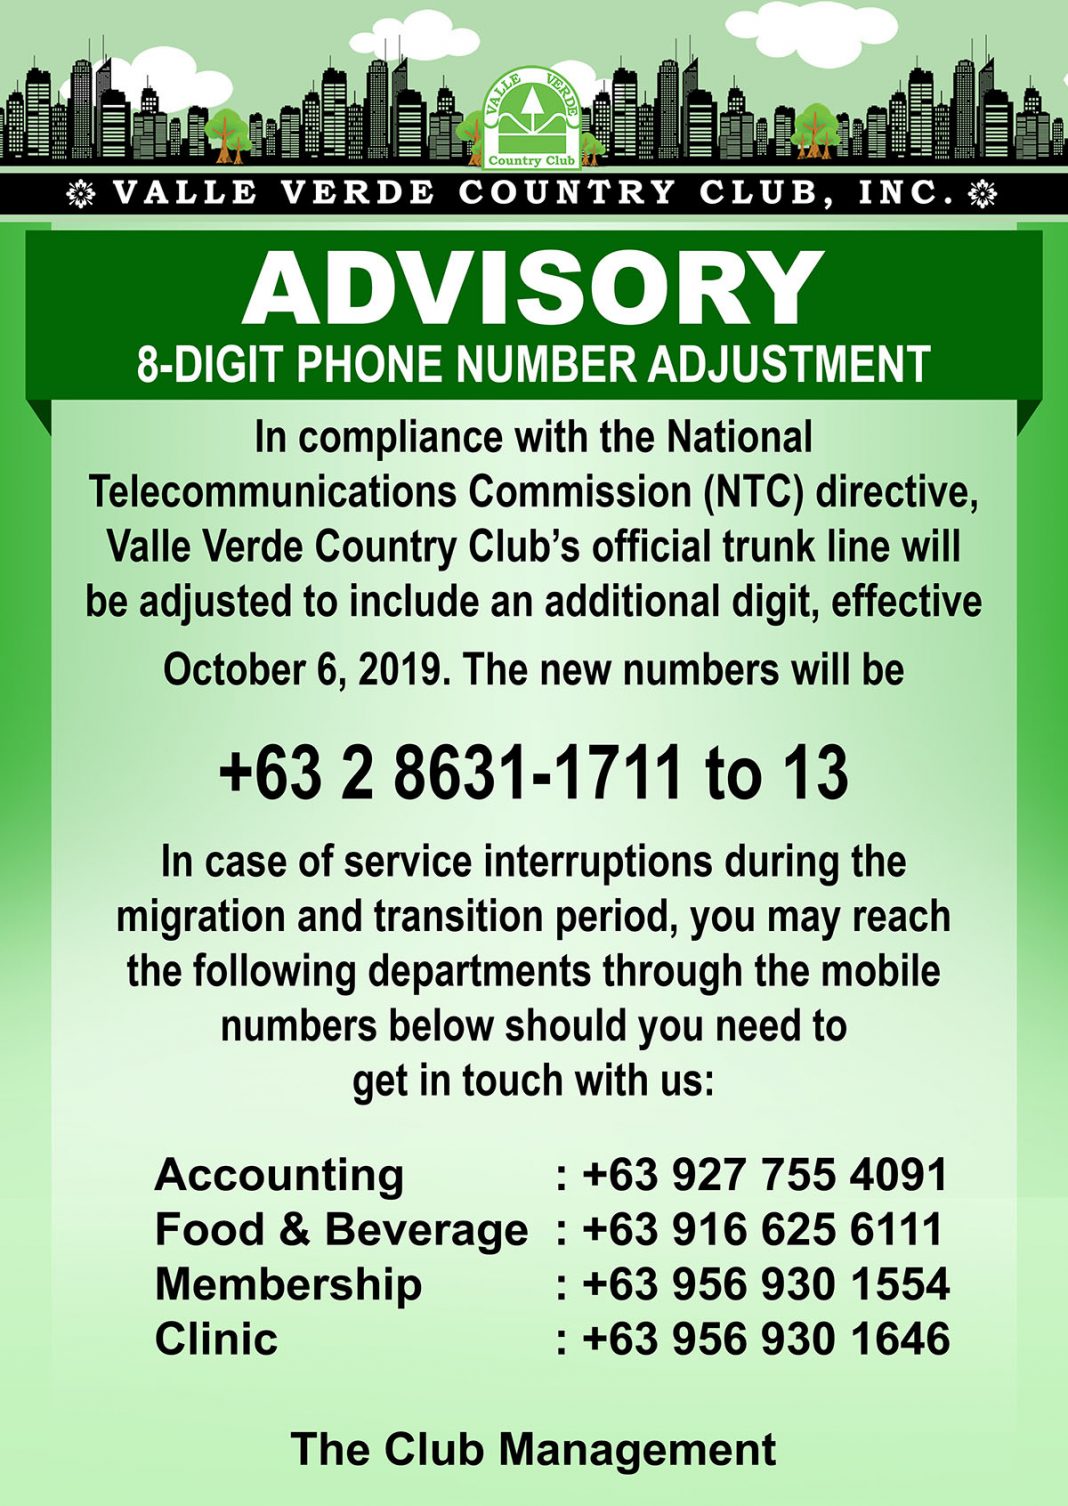 VVCCI Advisory 8-digit phone adjustment